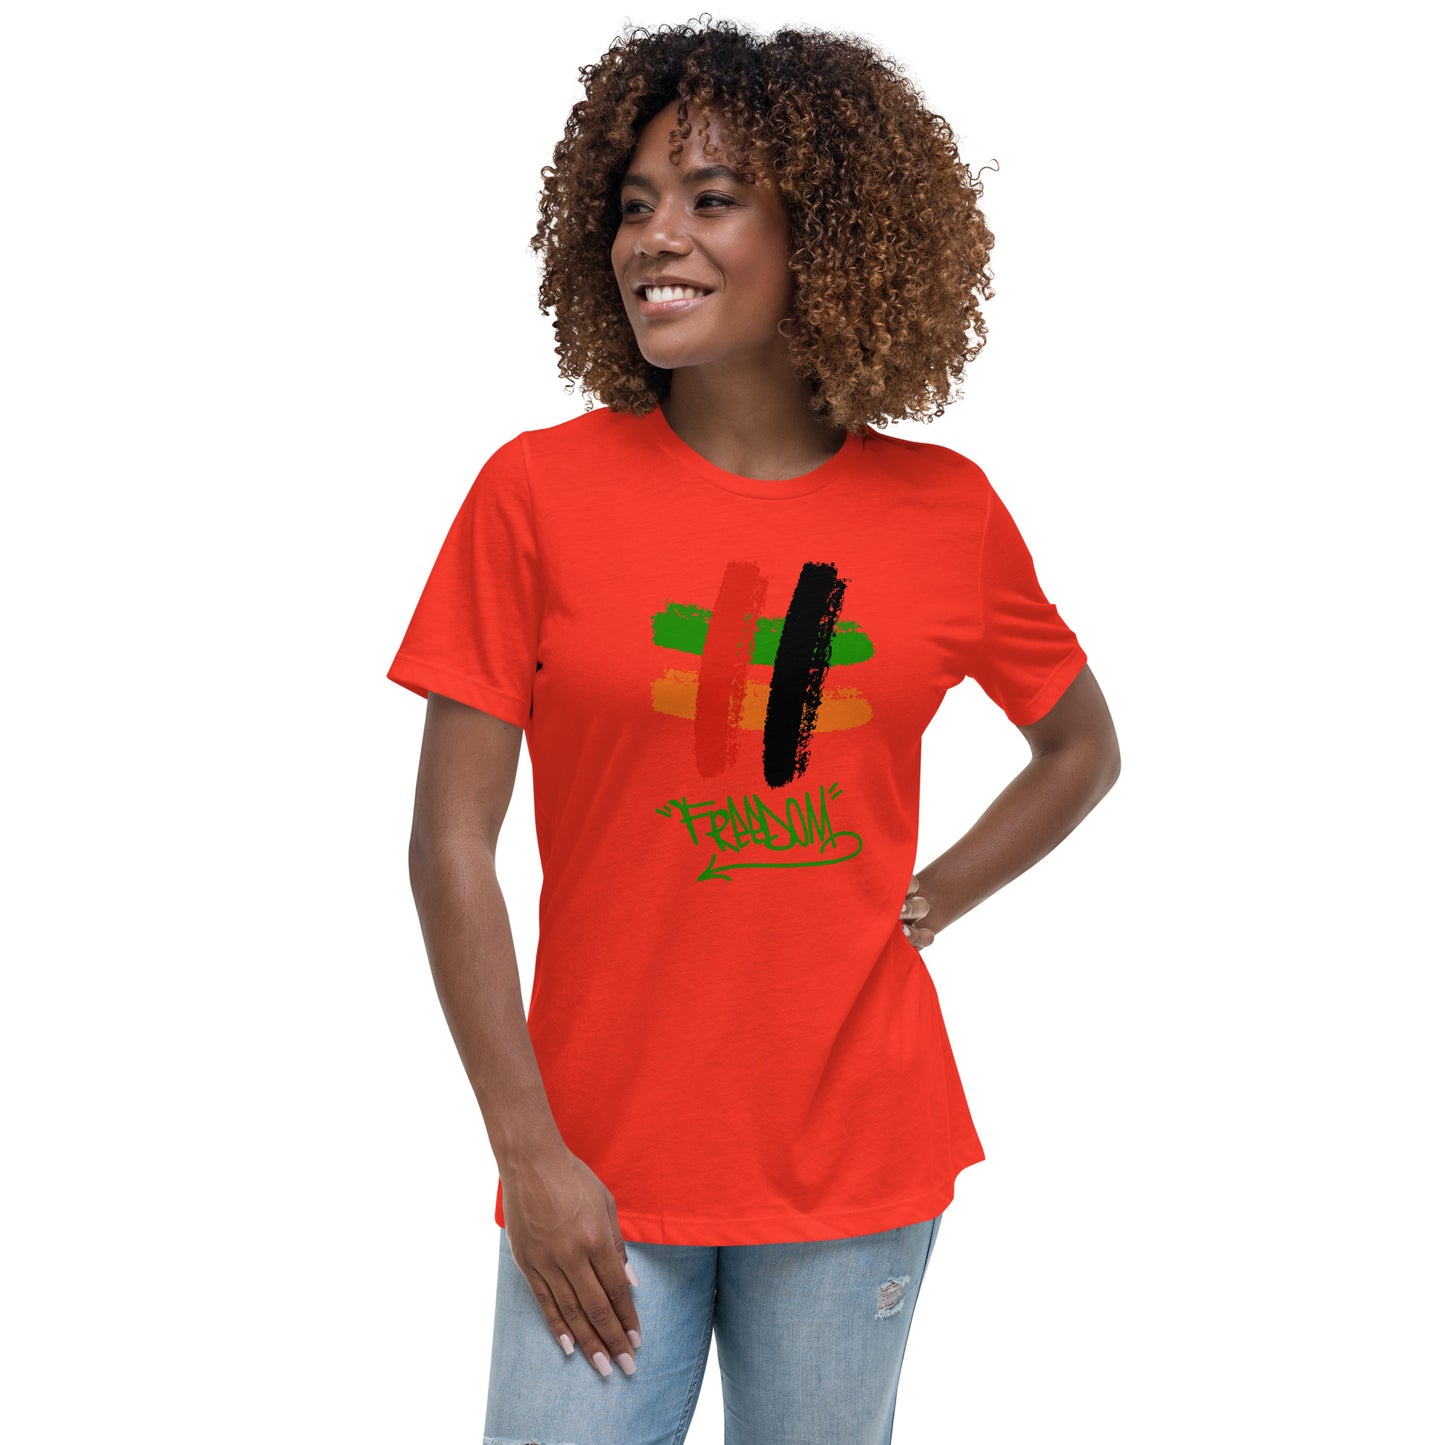 Women's Relaxed Zambia #Freedom T-Shirt